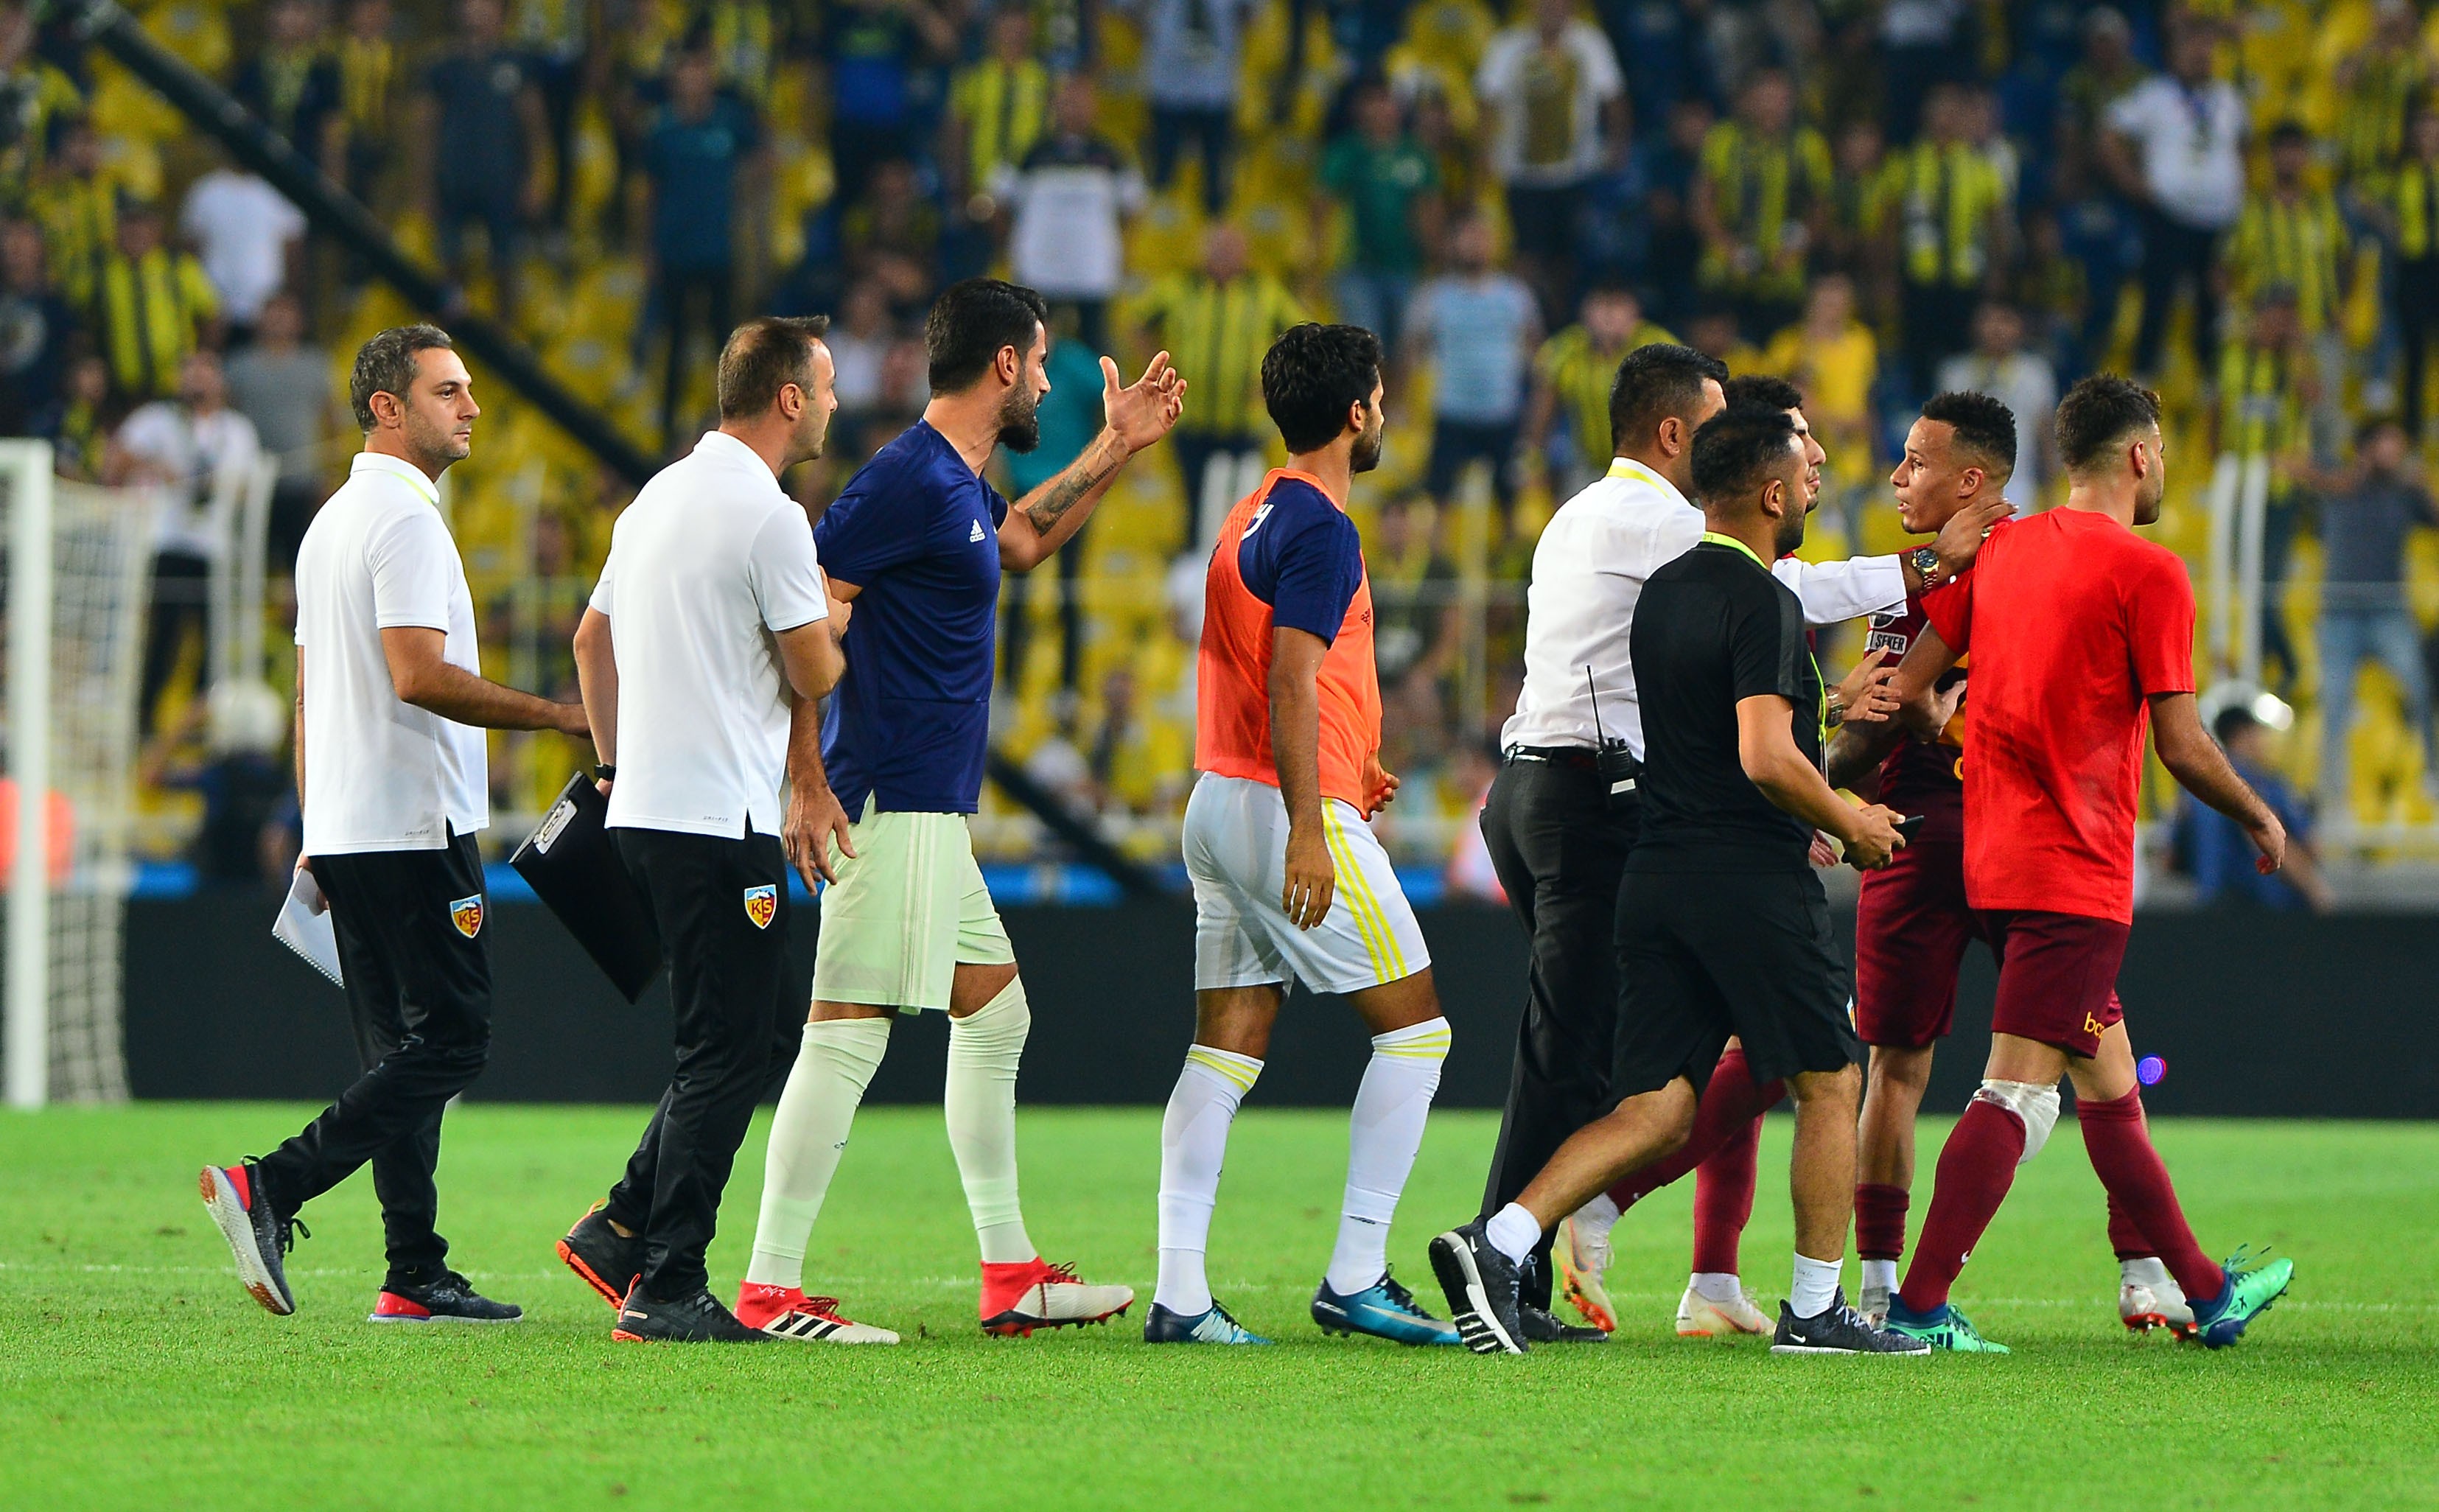 Volkan Demirel’den Kayserisporlu futbolculara tepki